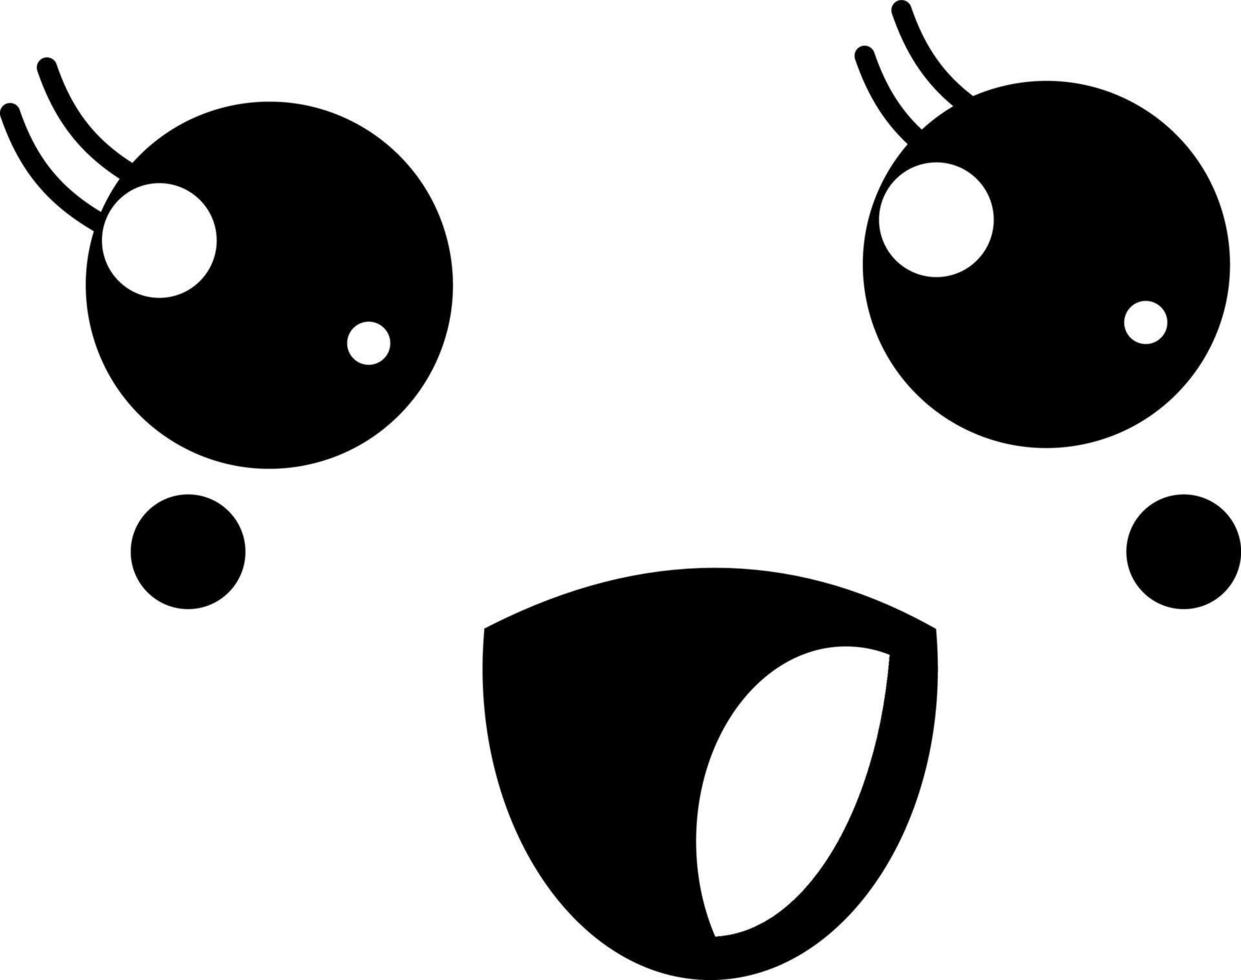 Joy emoji, illustration, vector on a white background.